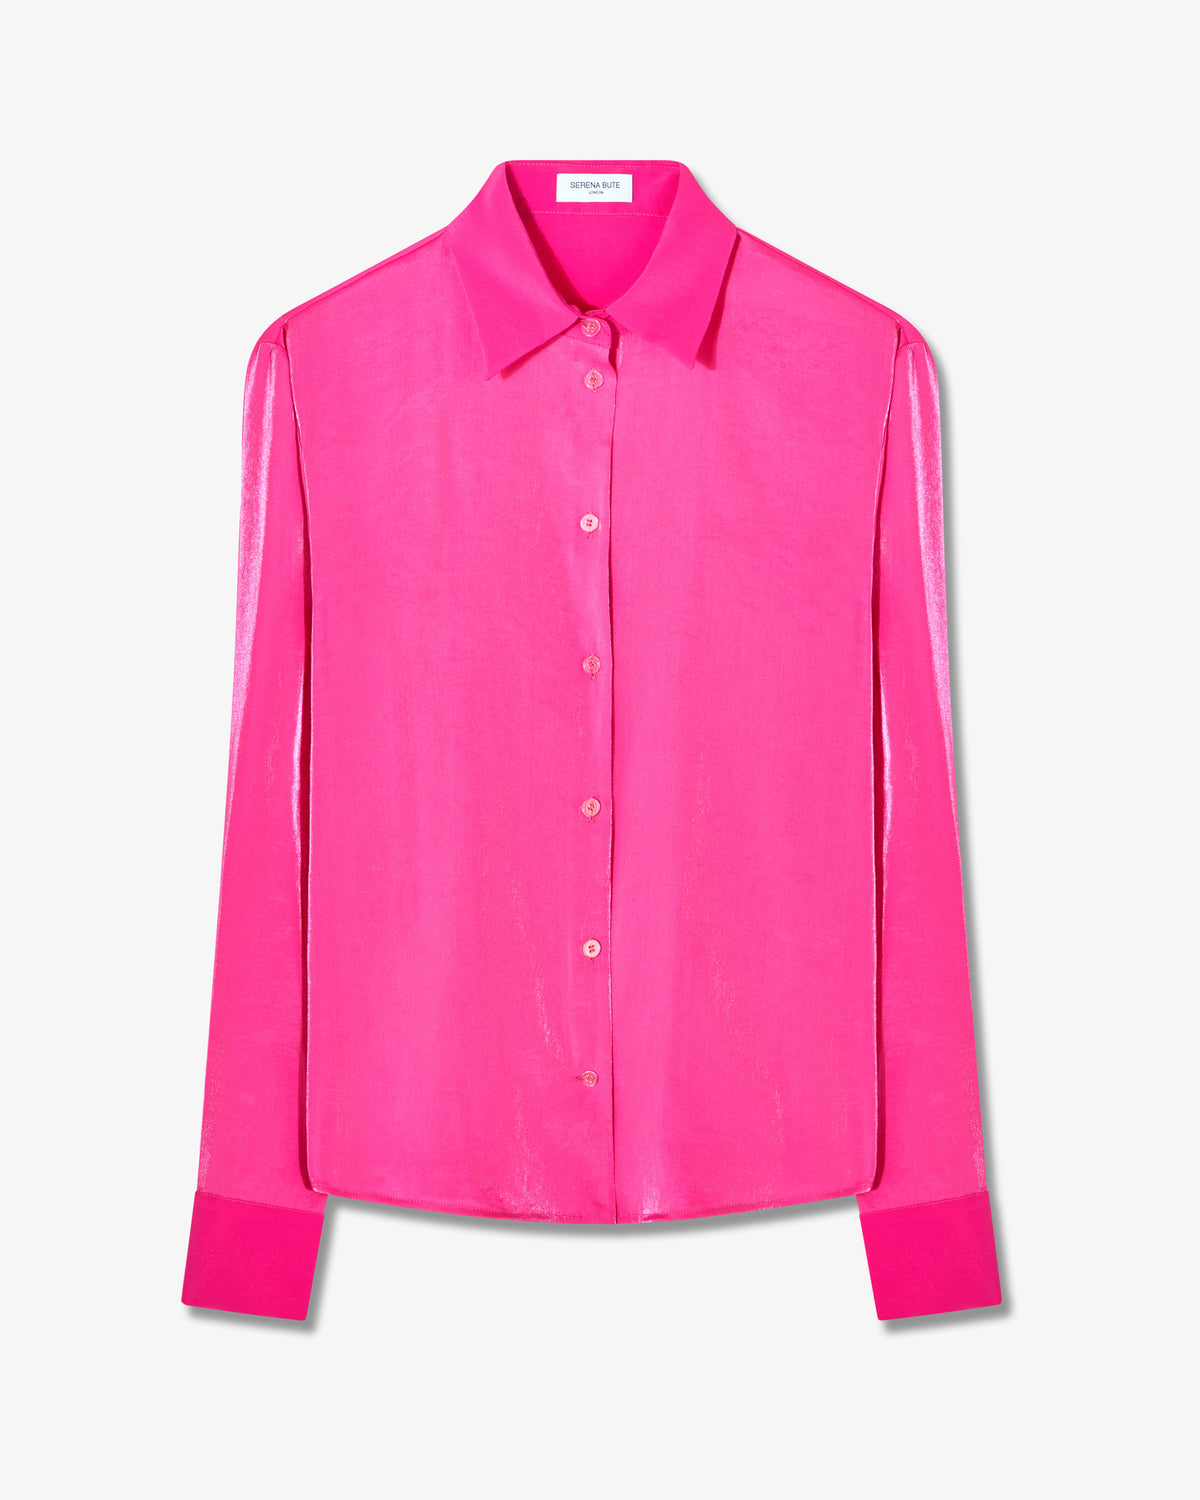 City Shirt - Fluro Pink